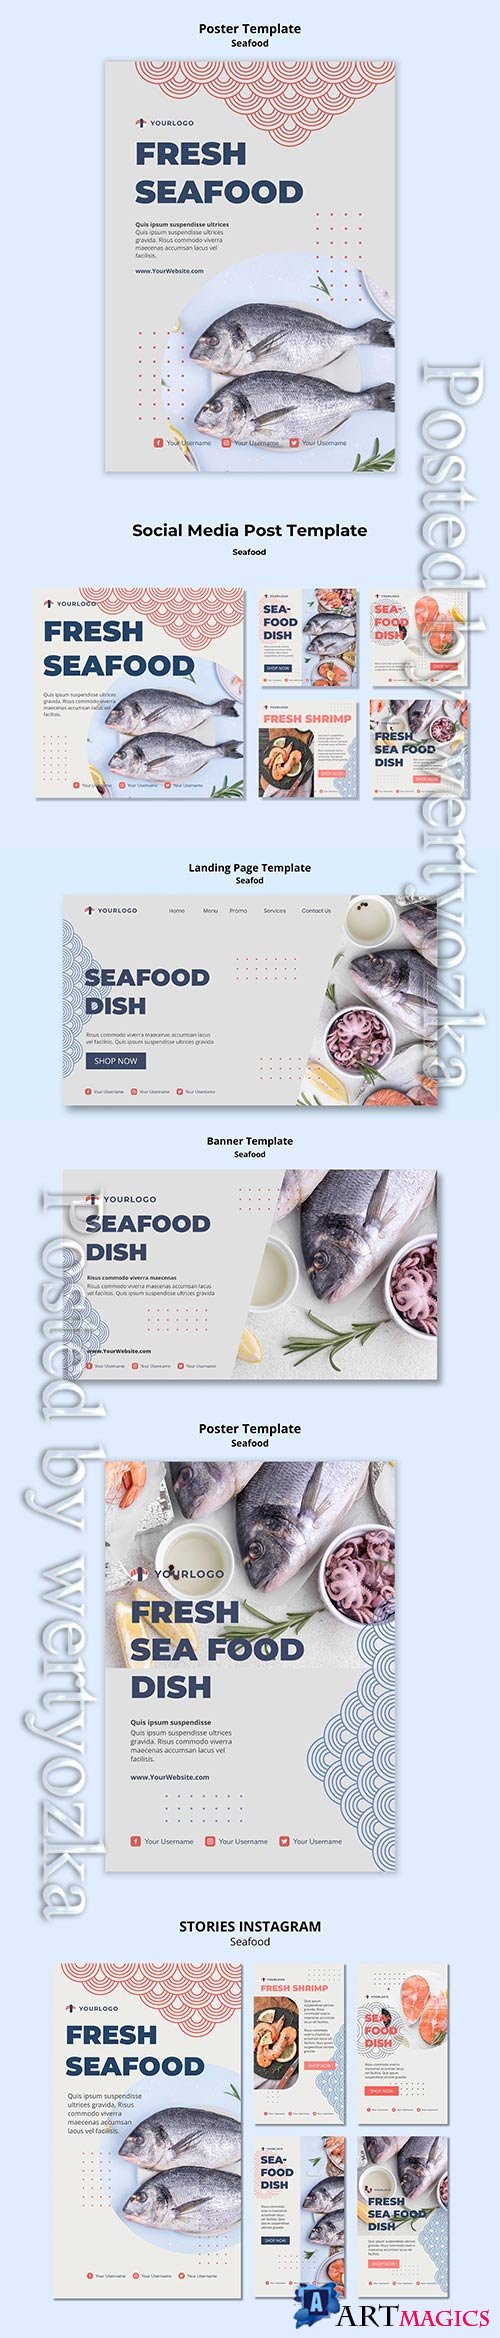 Seafood concept social media post template